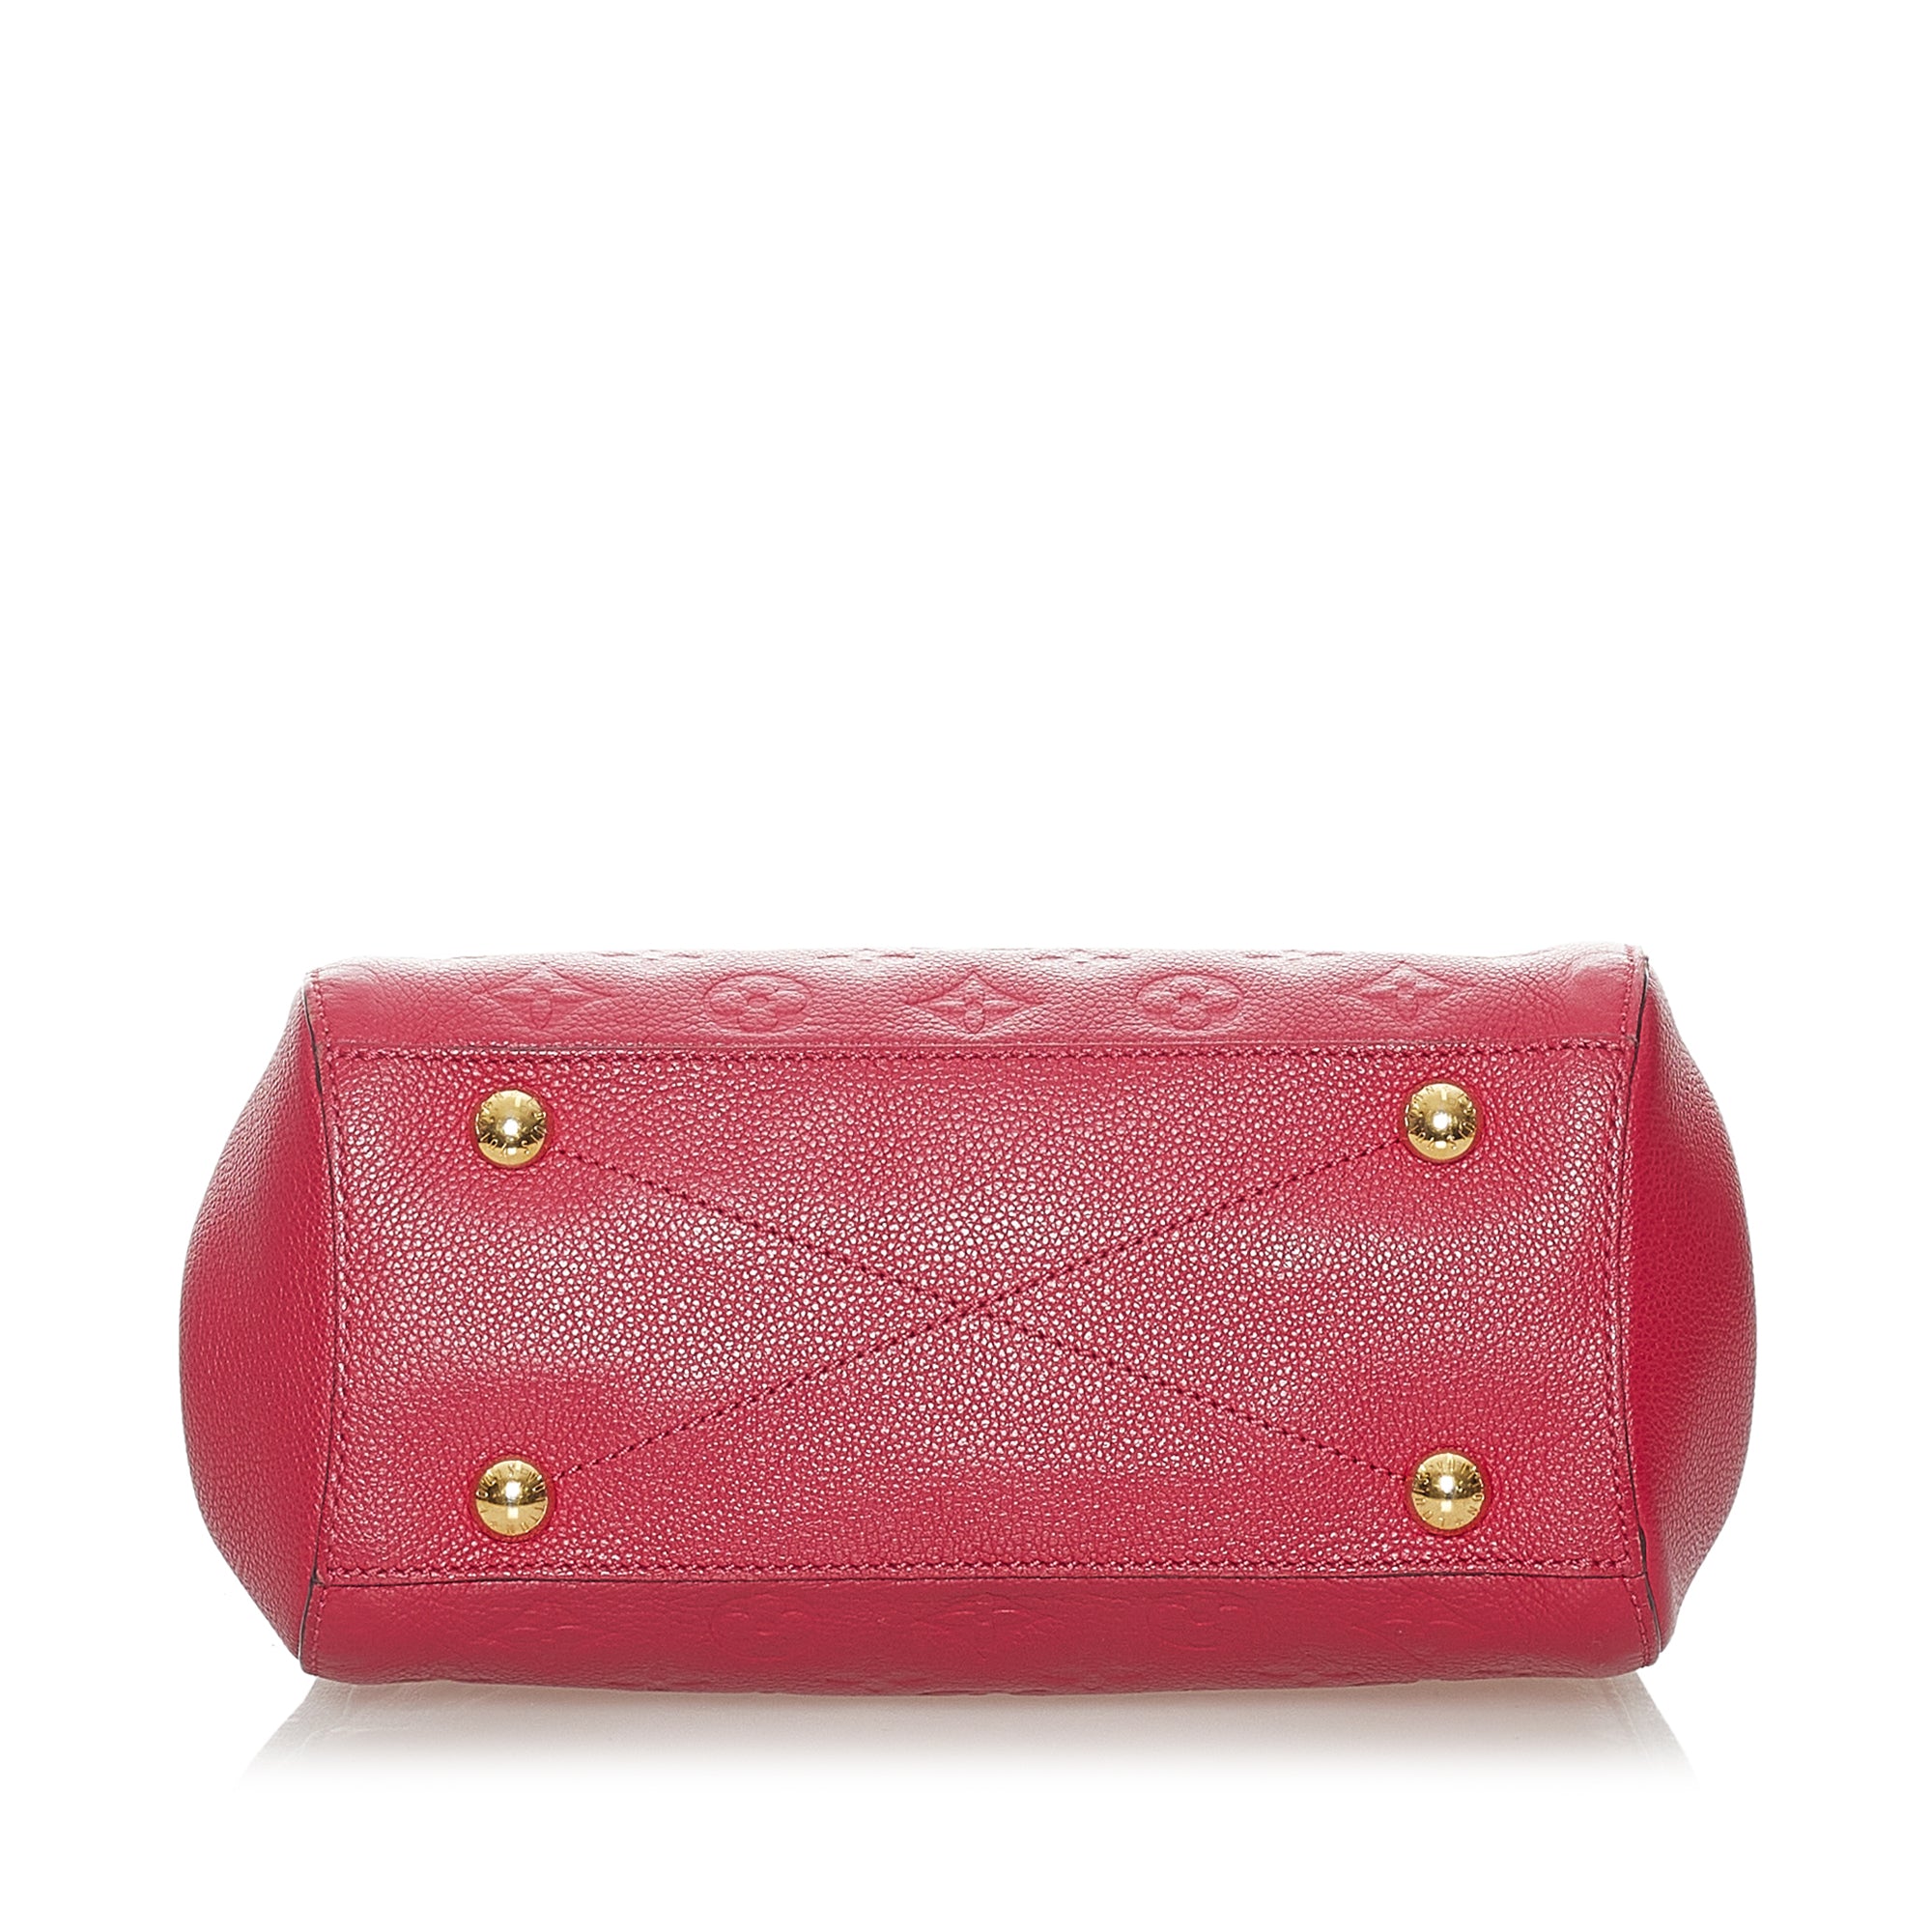 Louis Vuitton - Authenticated Montaigne Handbag - Leather Pink Plain for Women, Very Good Condition